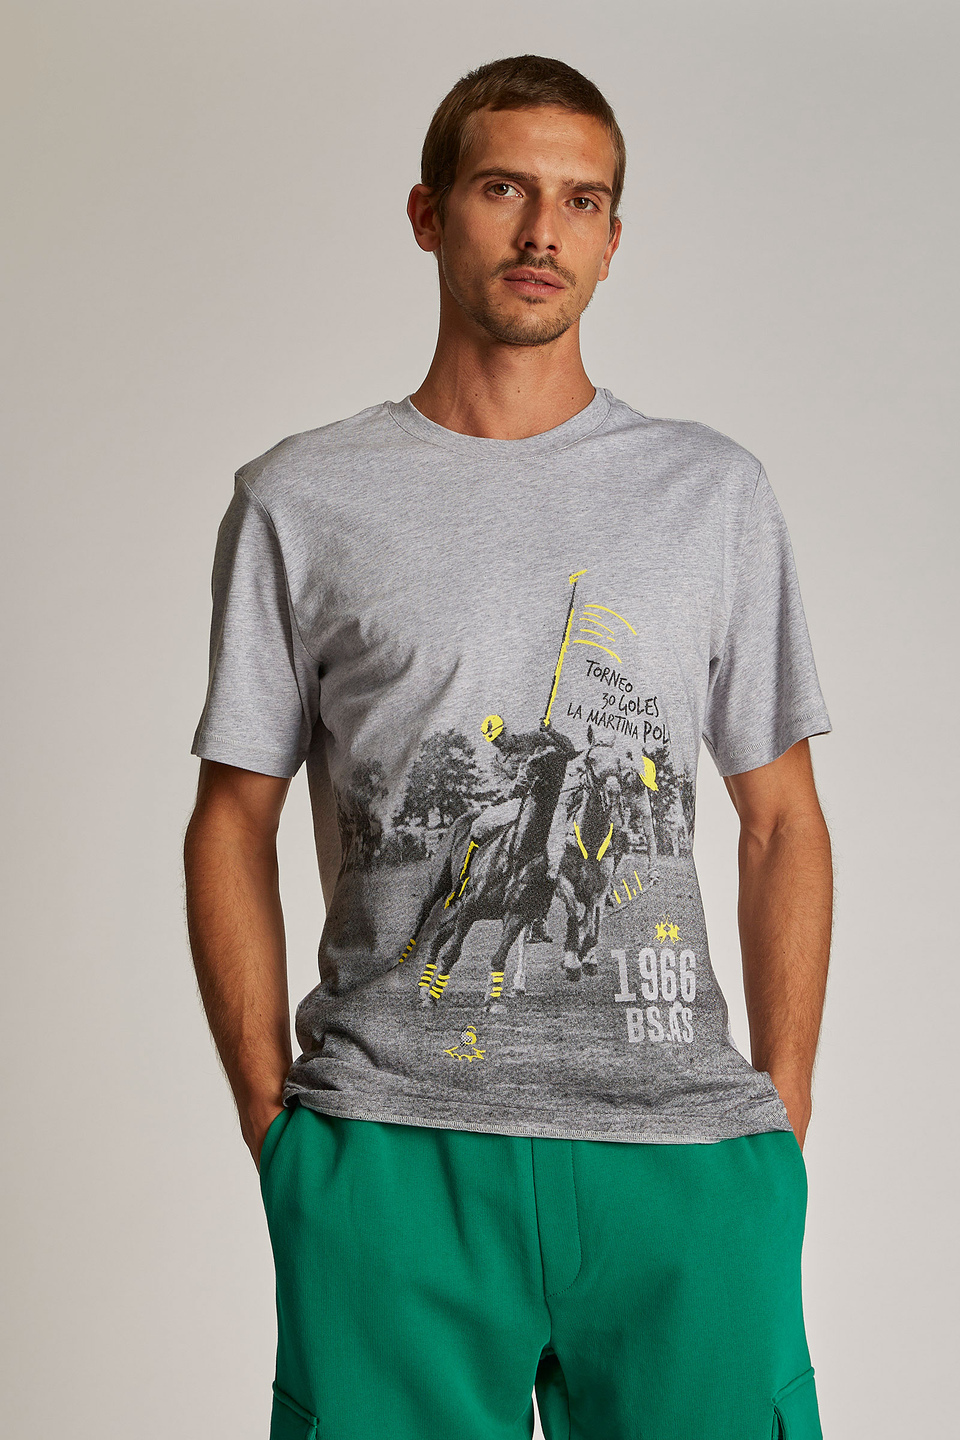 Herren-T-Shirt mit kurzem Arm im Regular Fit - La Martina - Official Online Shop